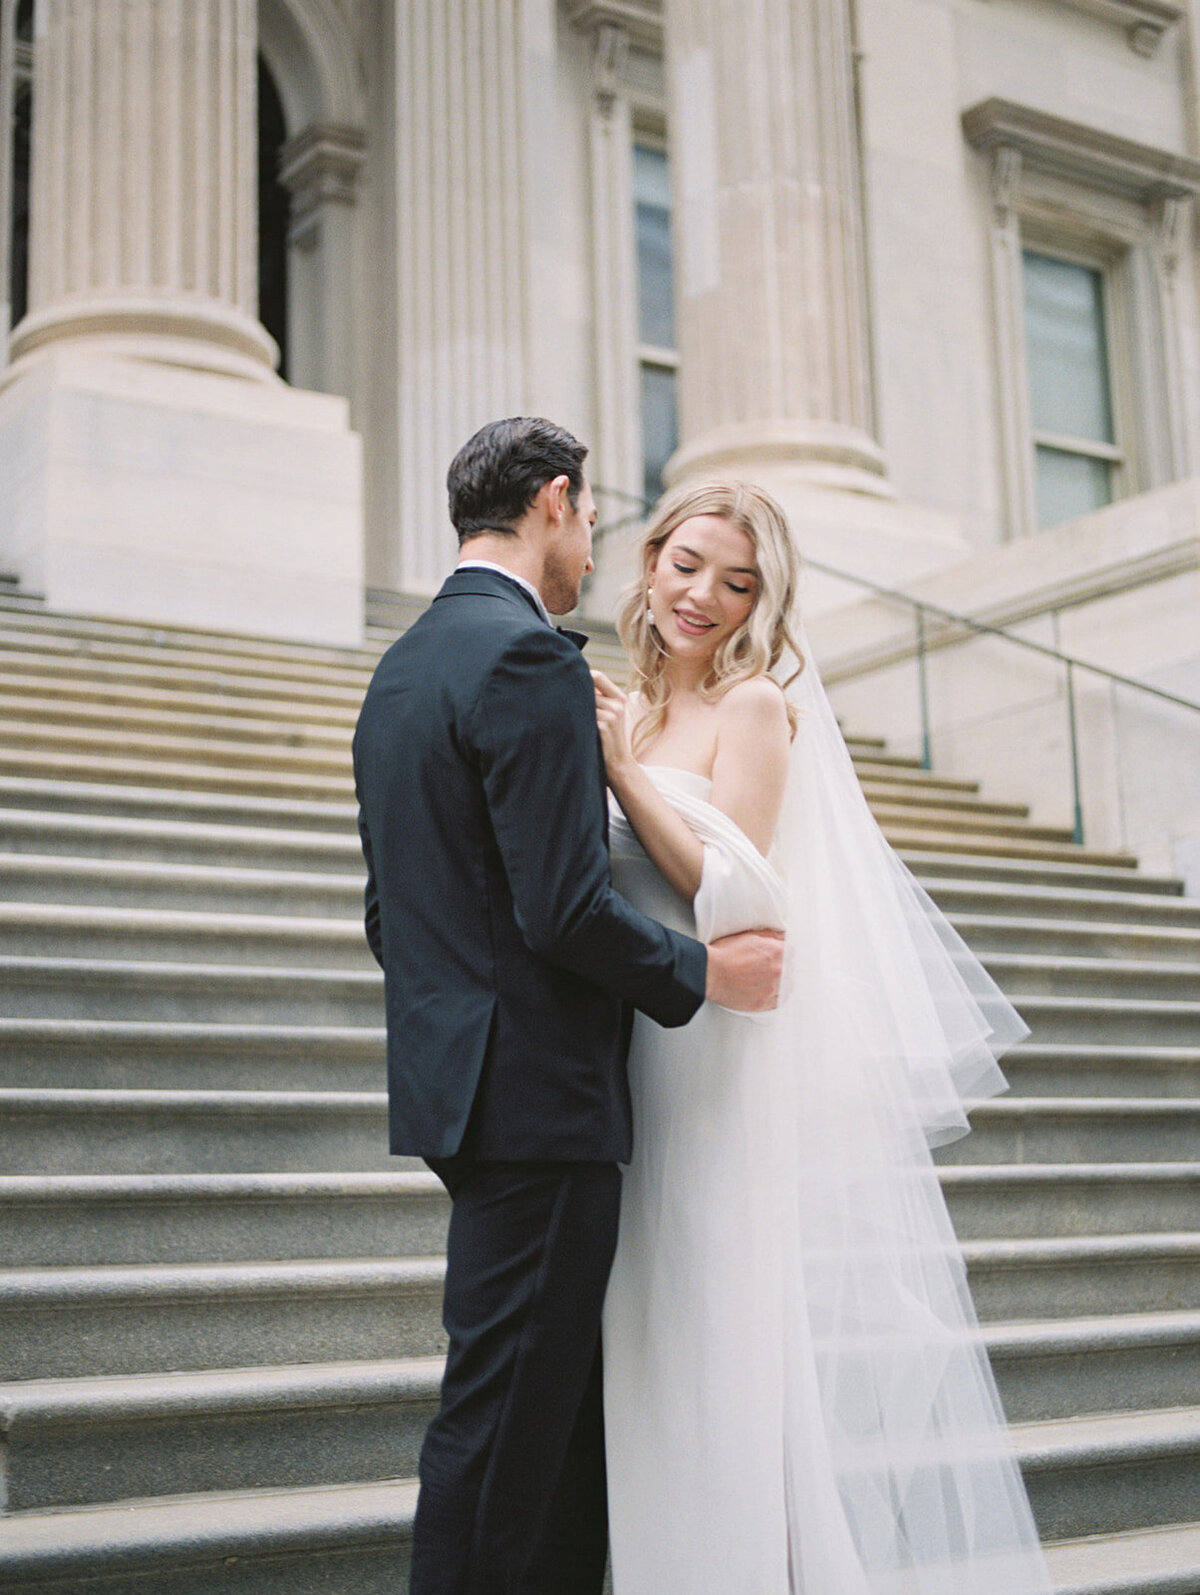 The Plaza Hotel - New York City - Elopement Wedding - Stephanie Michelle Photography - _stephaniemichellephotog - 39-R1-E001